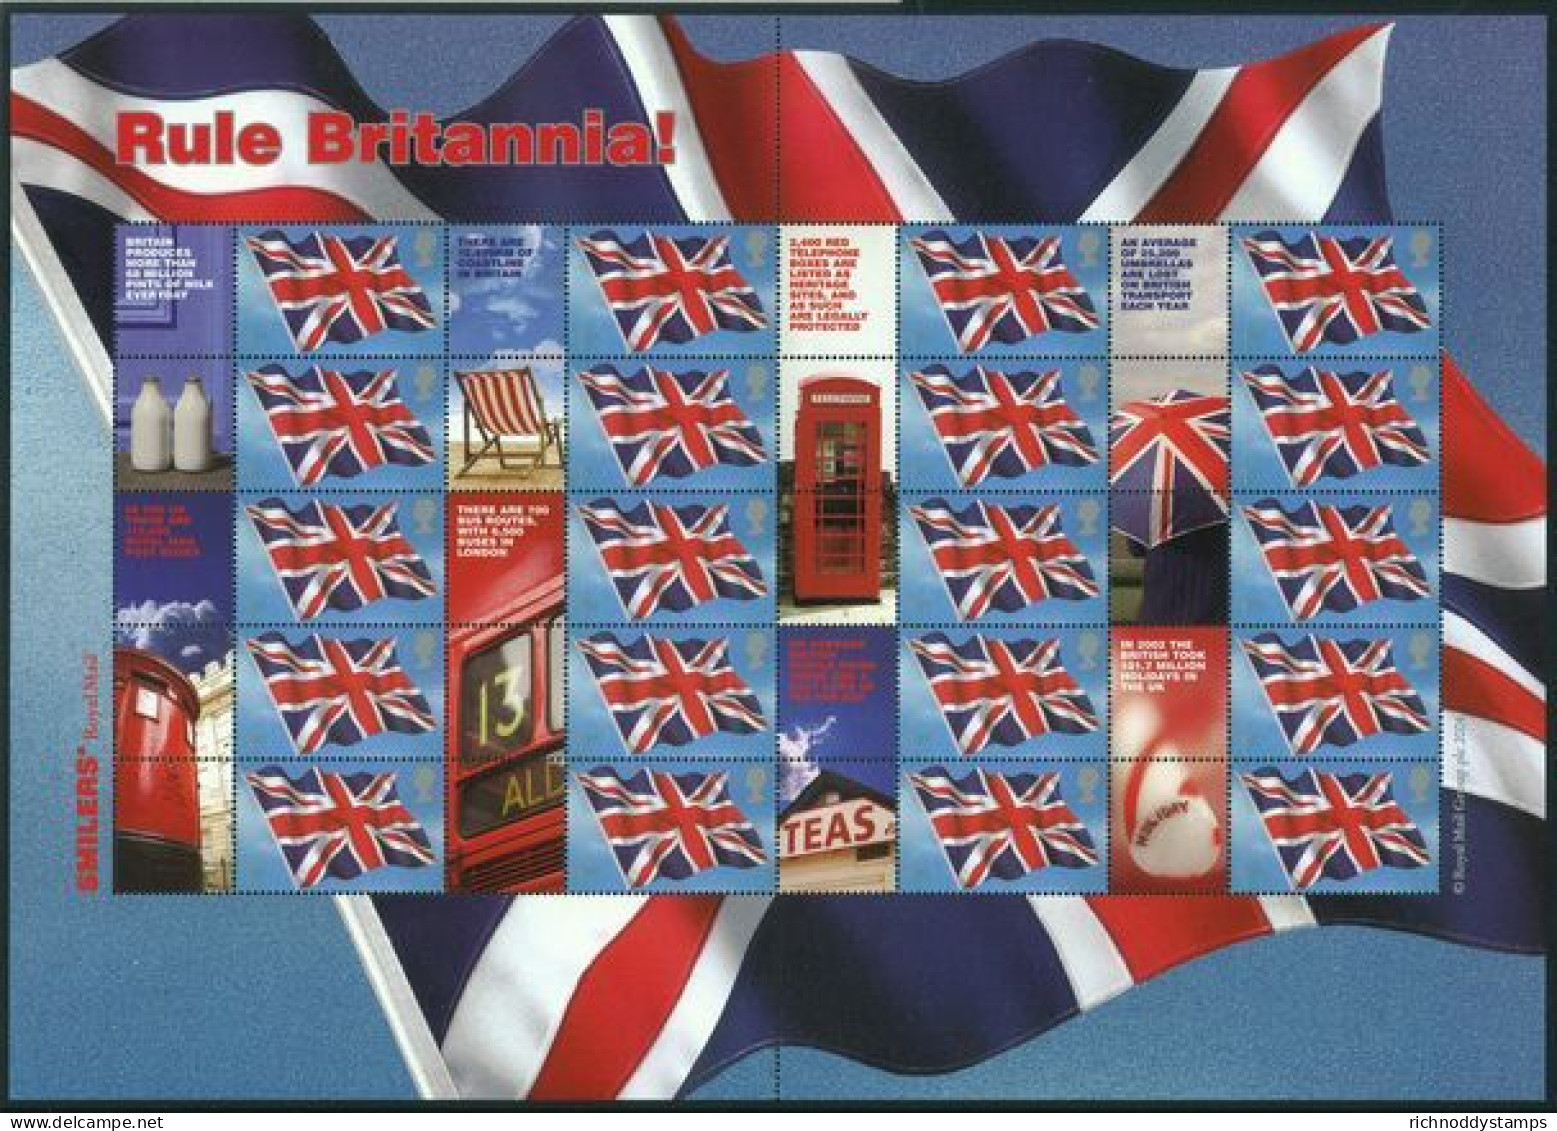 2004 Rule Britannia Smilers Sheet Unmounted Mint.  - Smilers Sheets